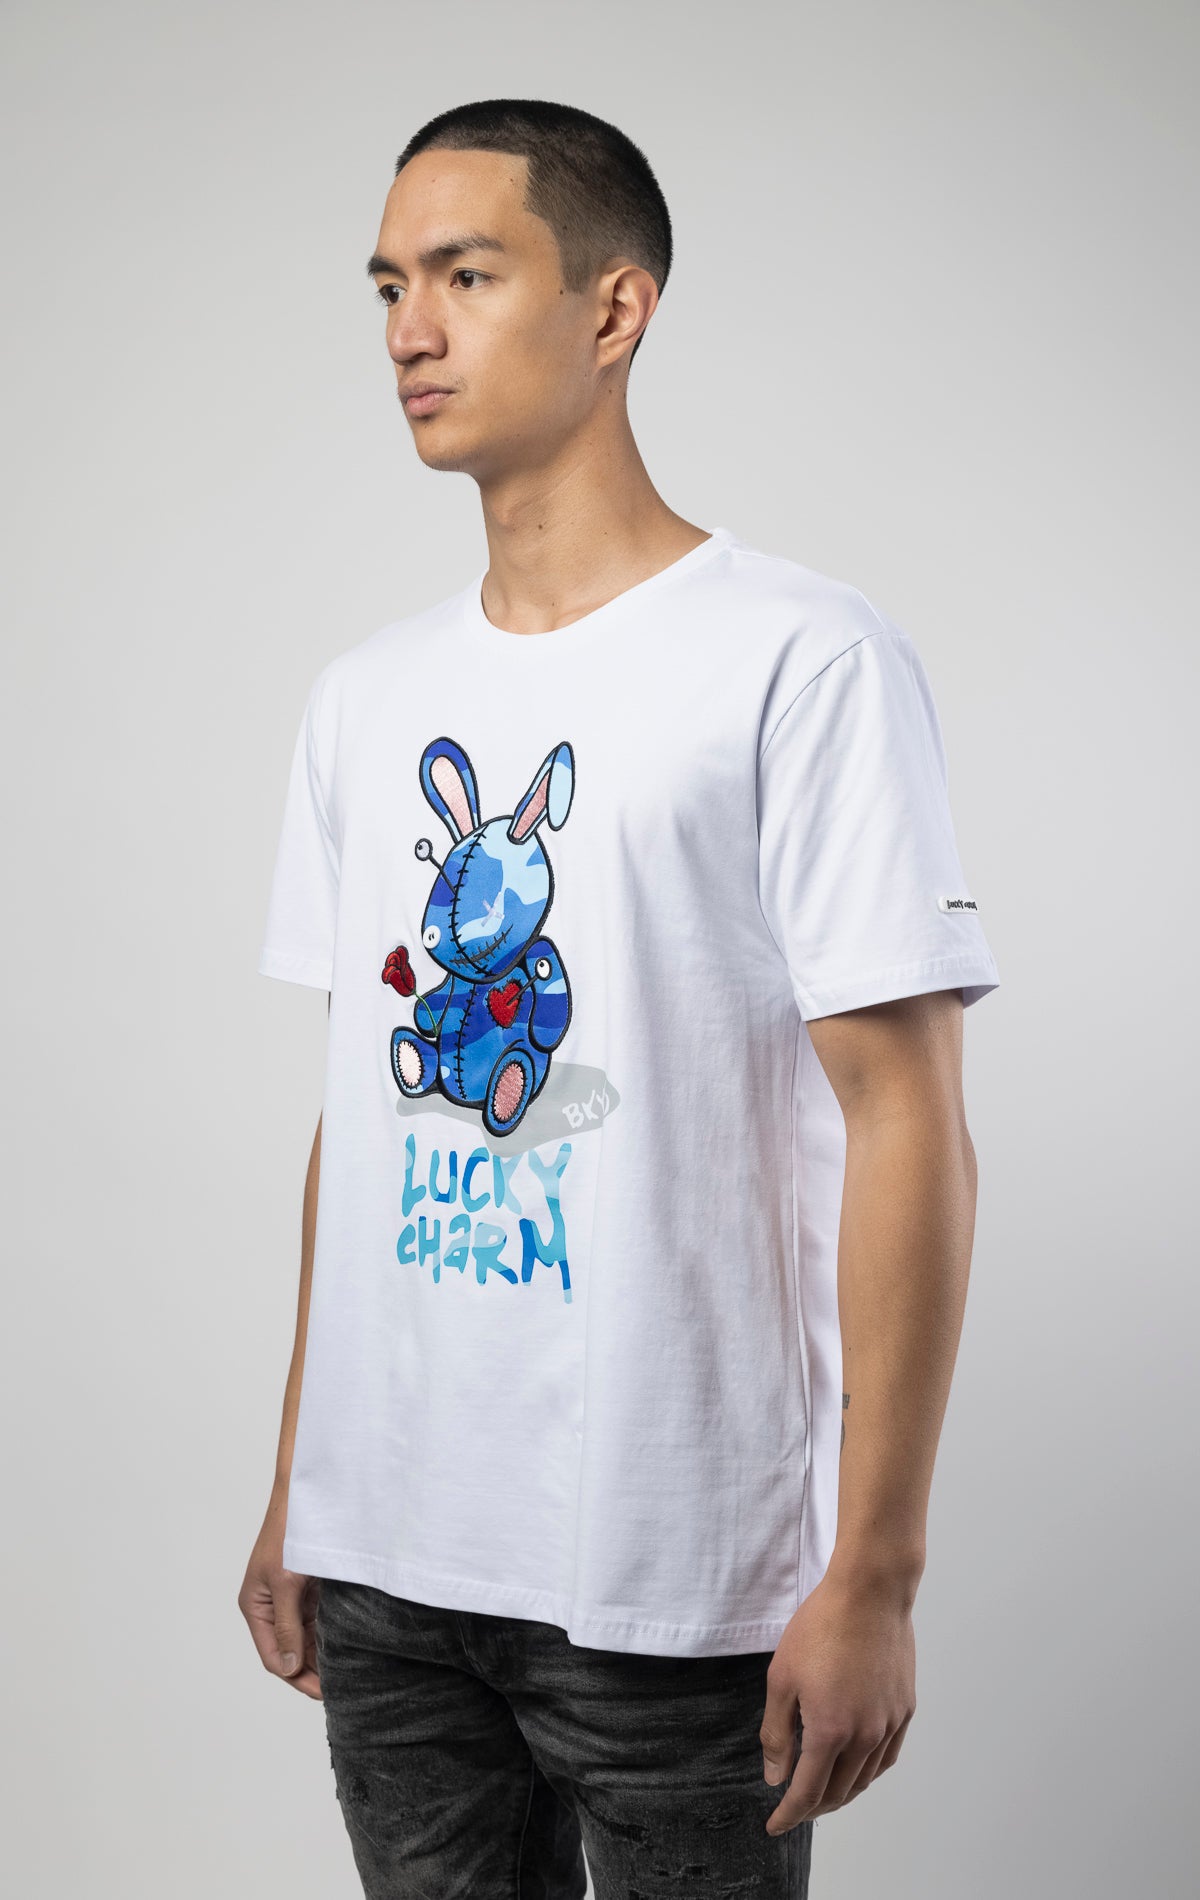 Blue camo luck charm bunny print on white tshirt